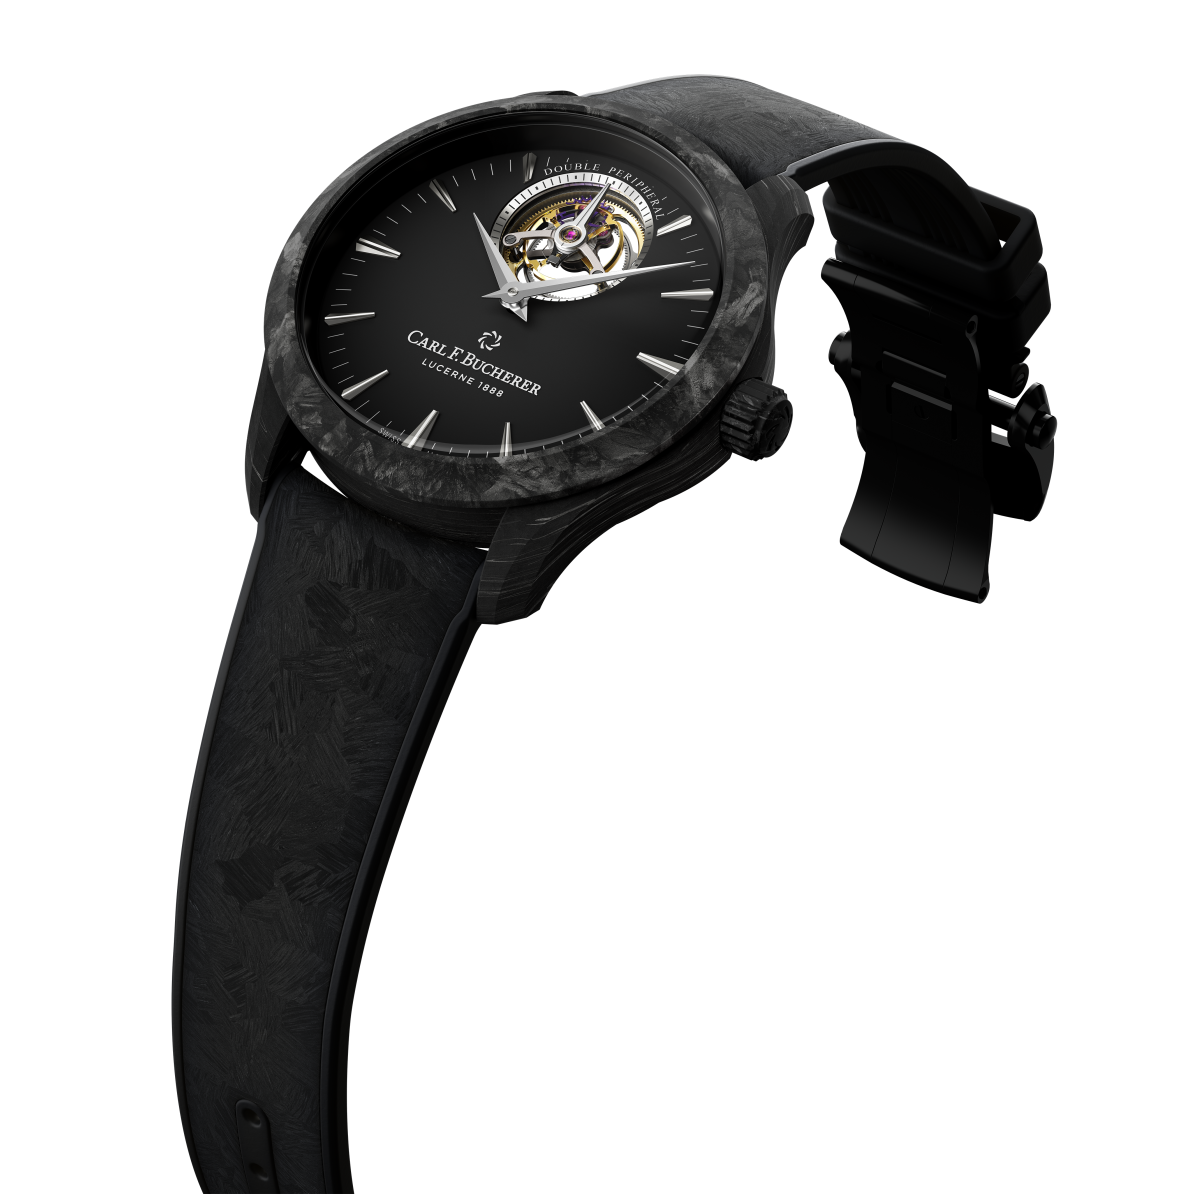 Carl F. Bucherer Manero Tourbillon Carbon Limited Edition Men's Watch